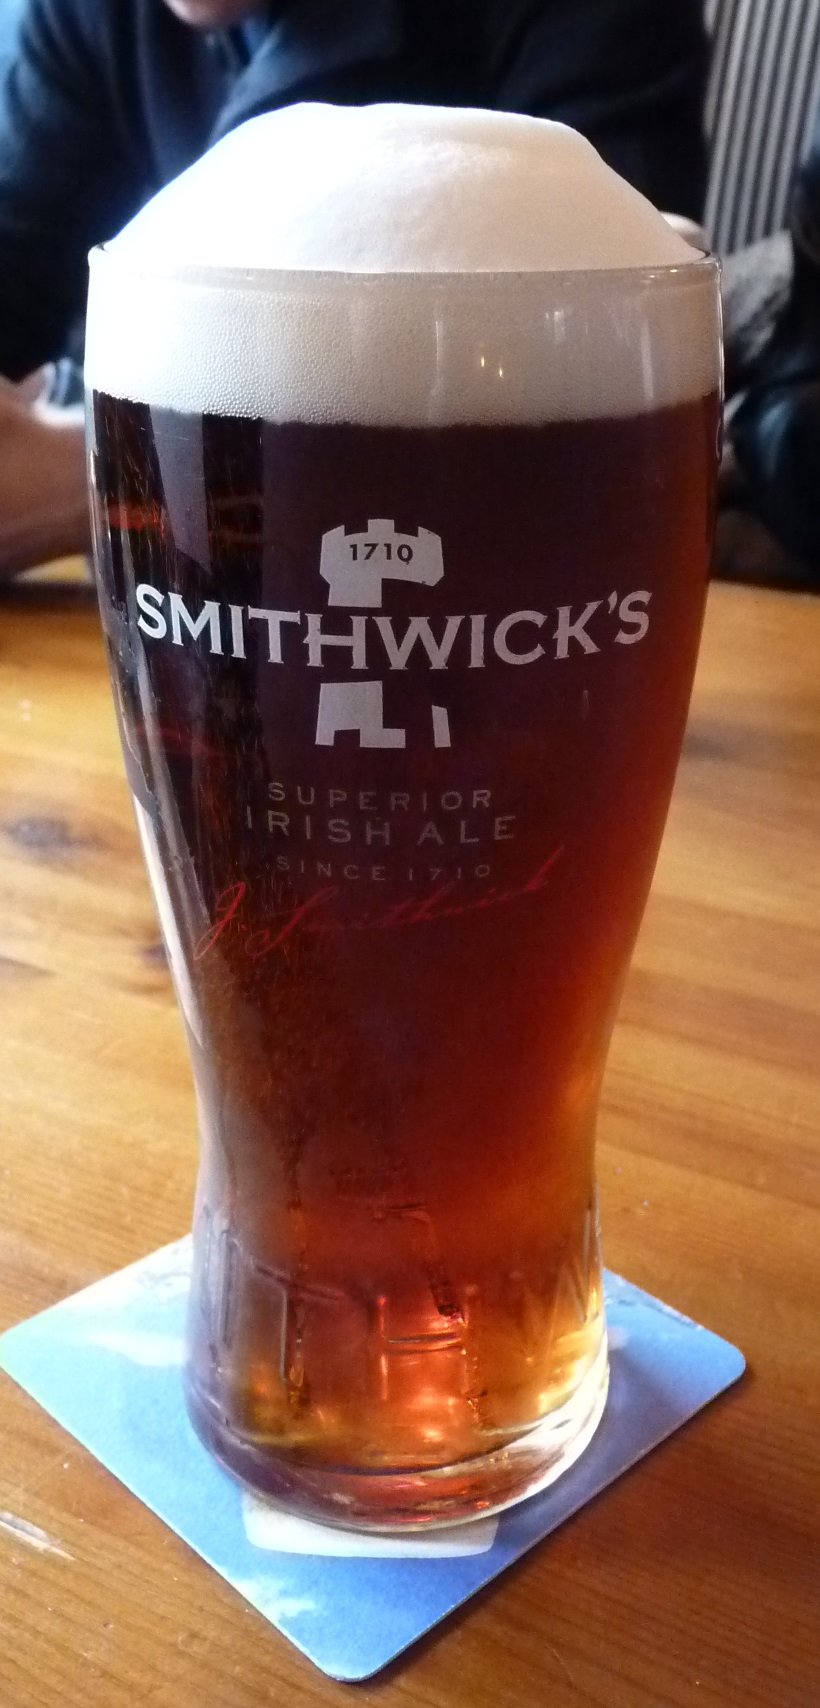 Smithwick irish ale